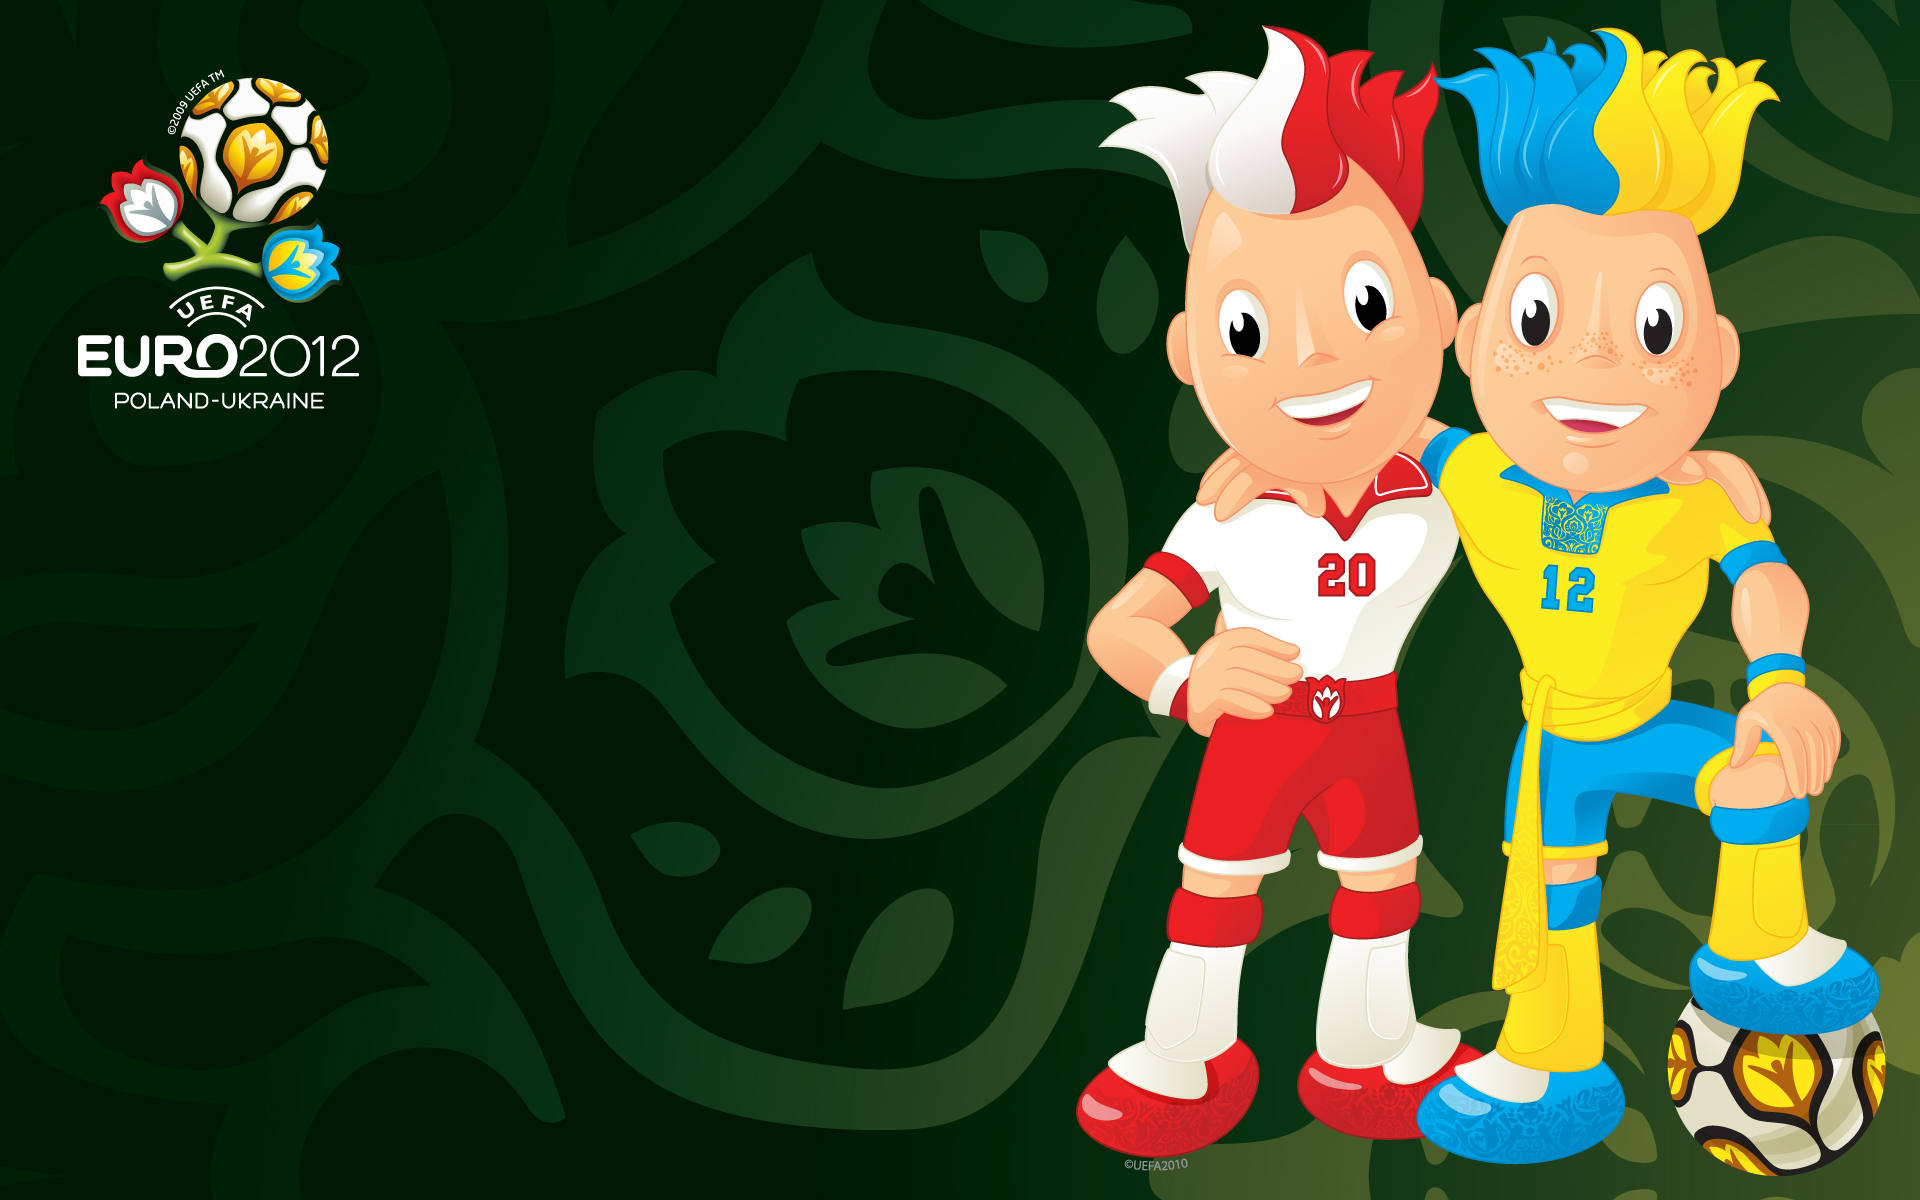 Poland-Ukraine uefa euro 2012 бесплатно